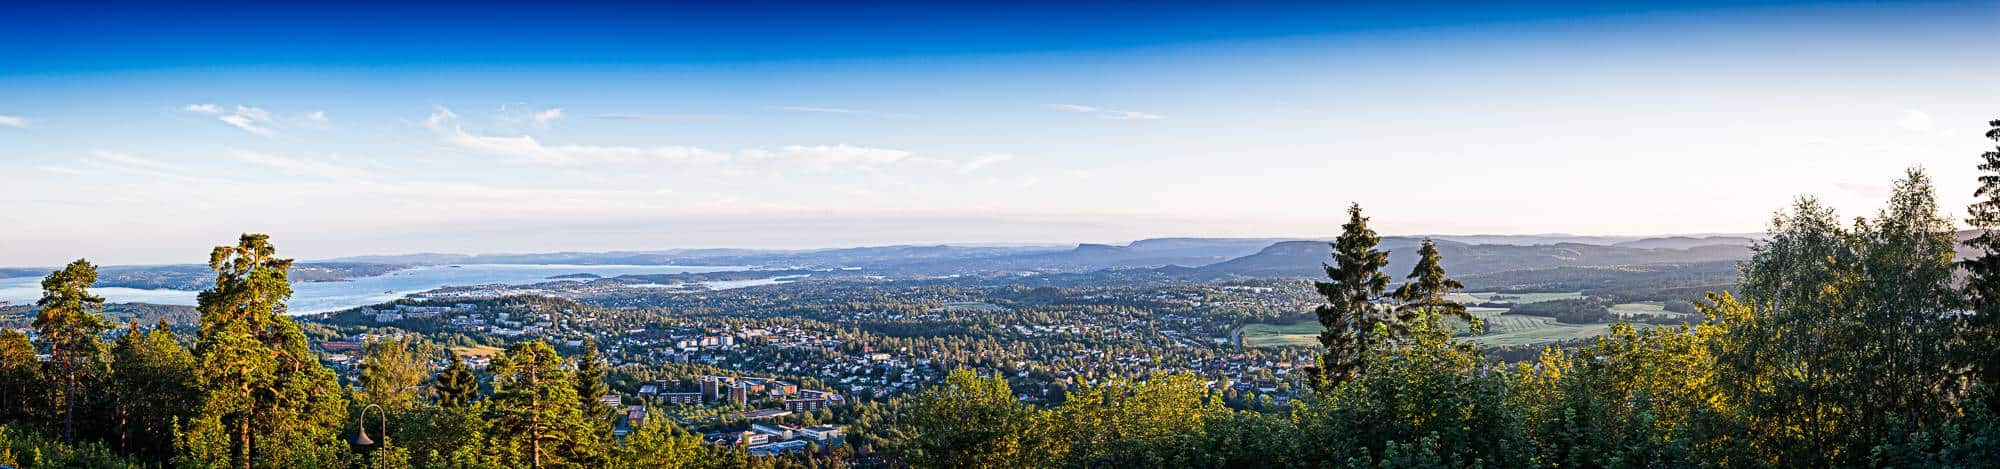 View from Holmenkollen